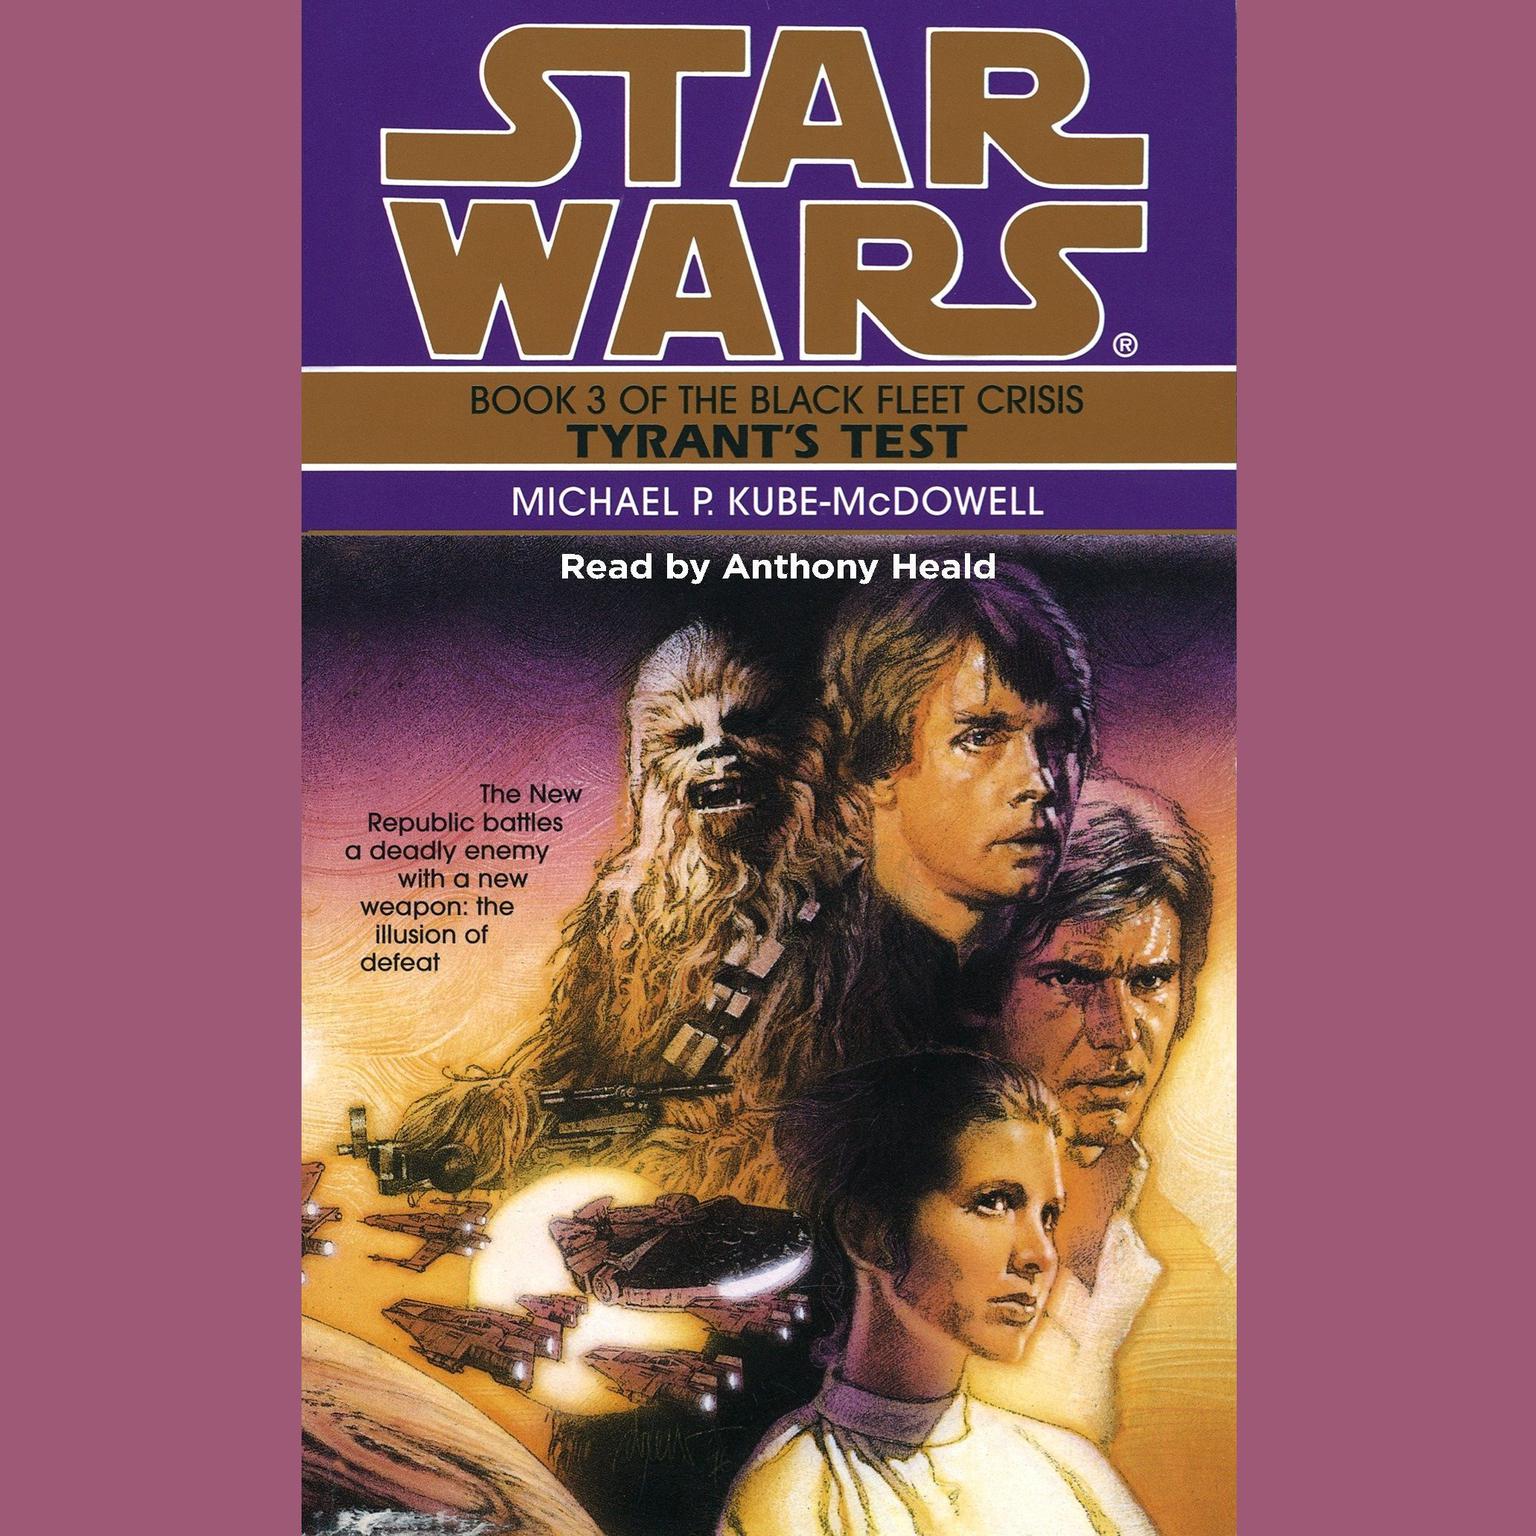 Star Wars: The Black Fleet Crisis: Tyrants Test (Abridged): Book 3 Audiobook, by Michael P. Kube-Mcdowell